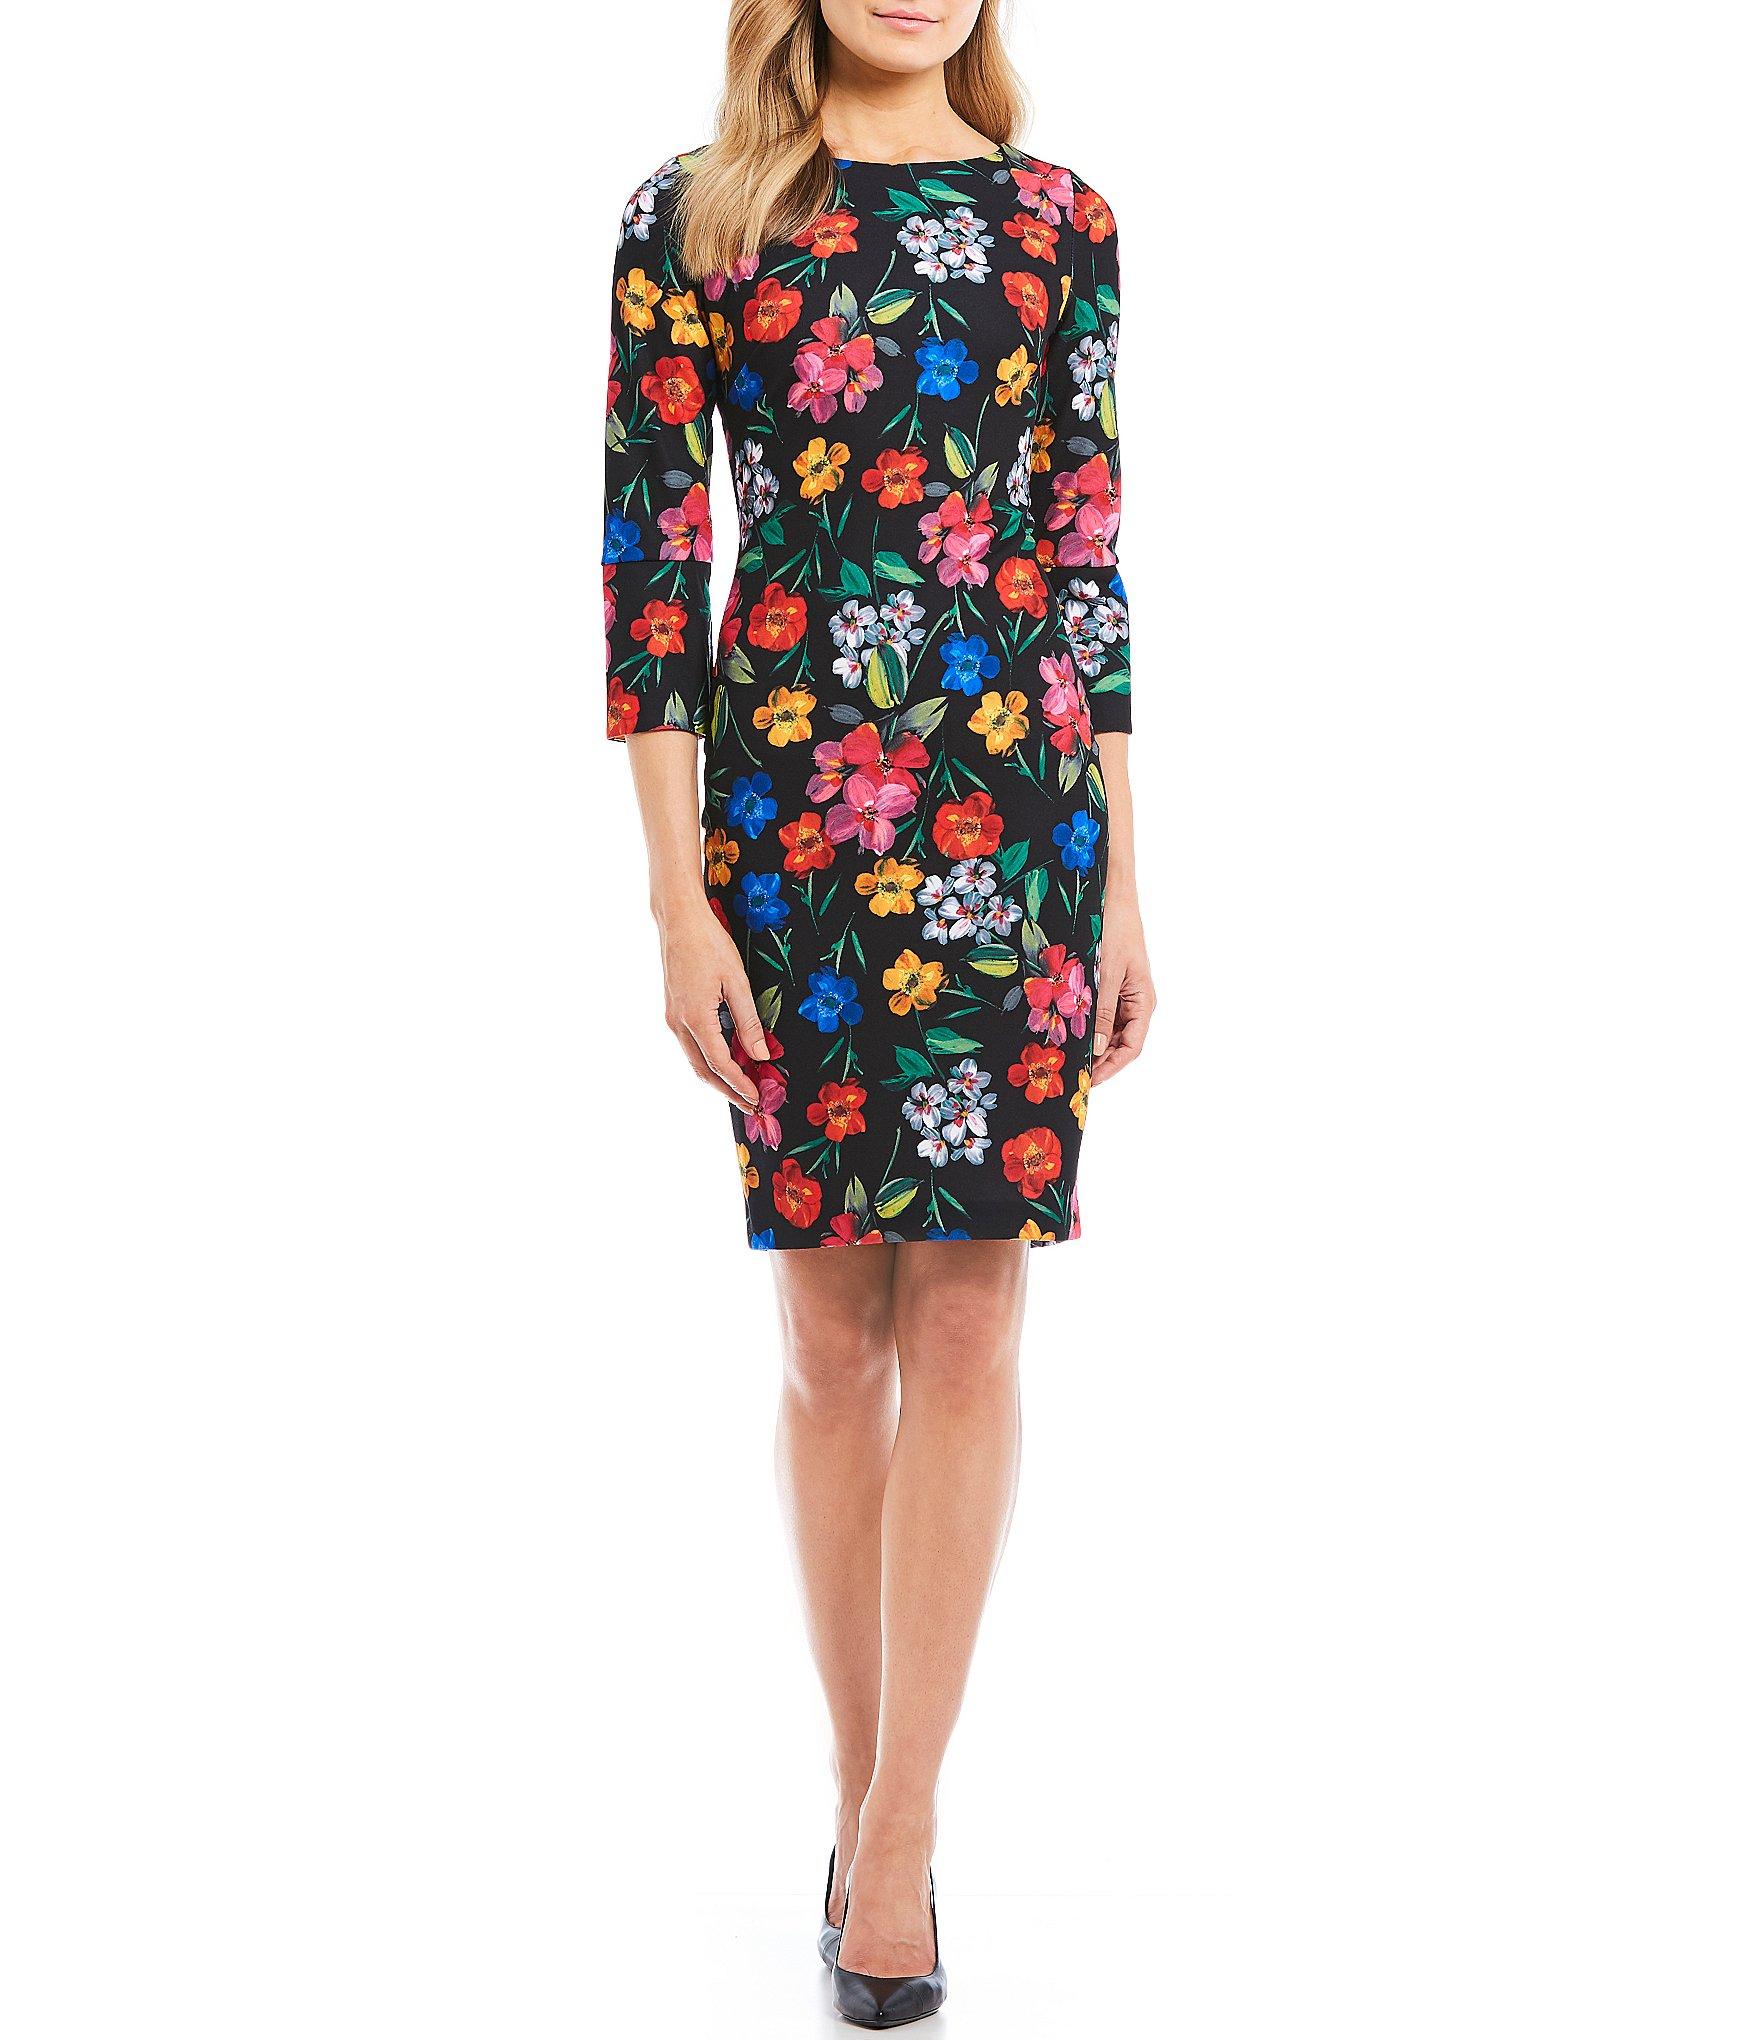 Lyst - Calvin Klein Floral Print Split 3/4 Sleeve Sheath Dress in Black